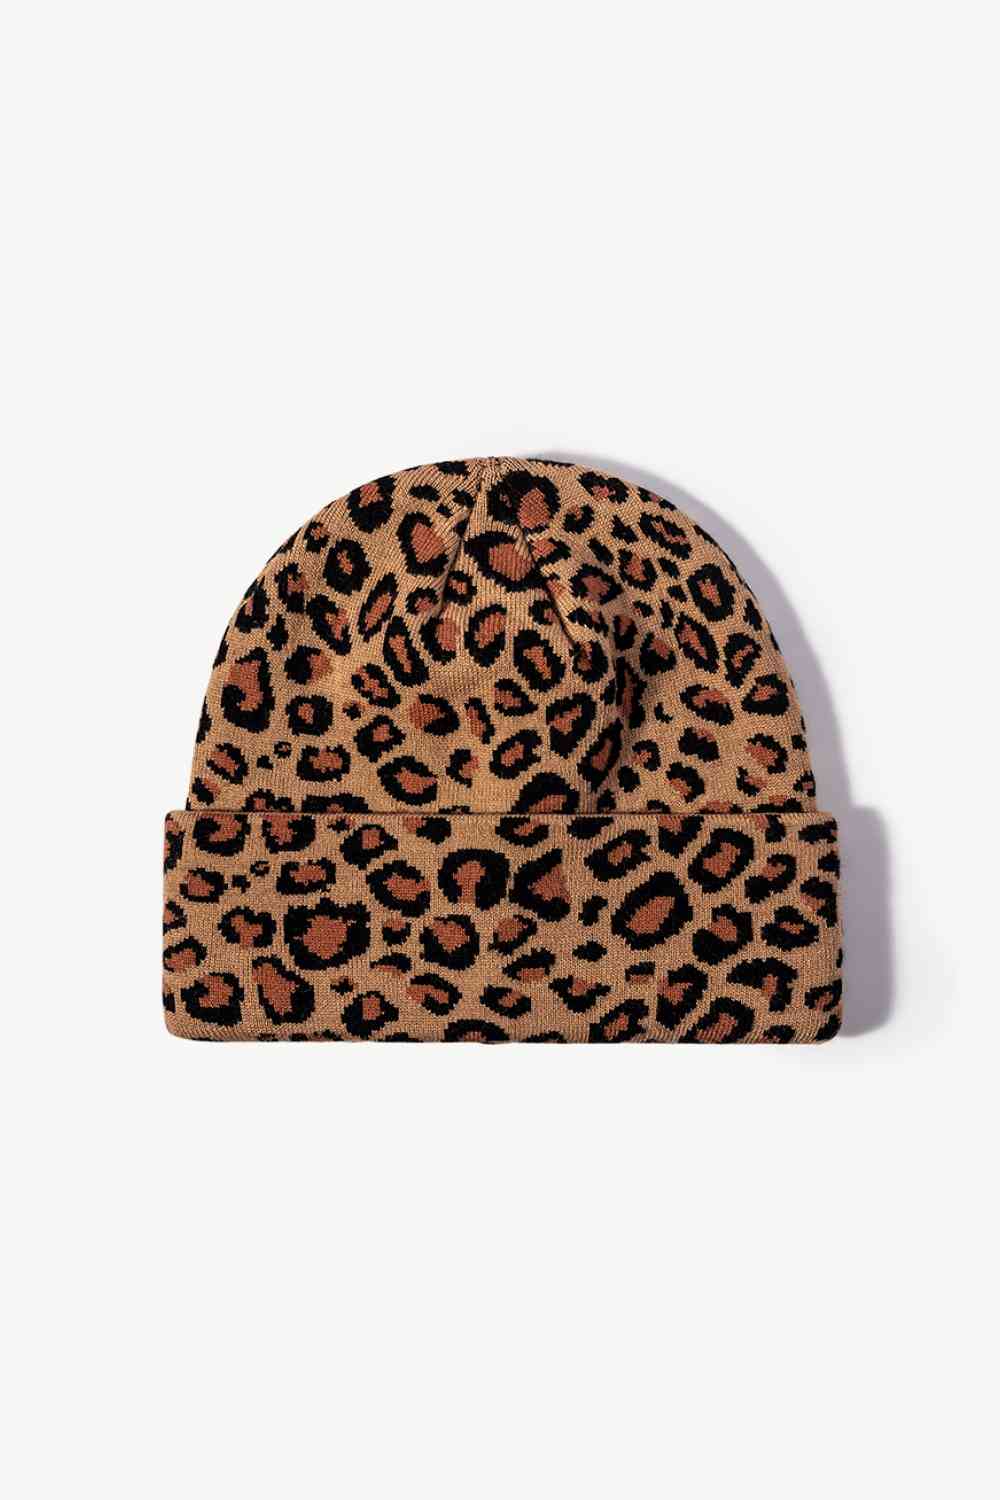 Leopard Pattern Cuffed Beanie Brown One Size